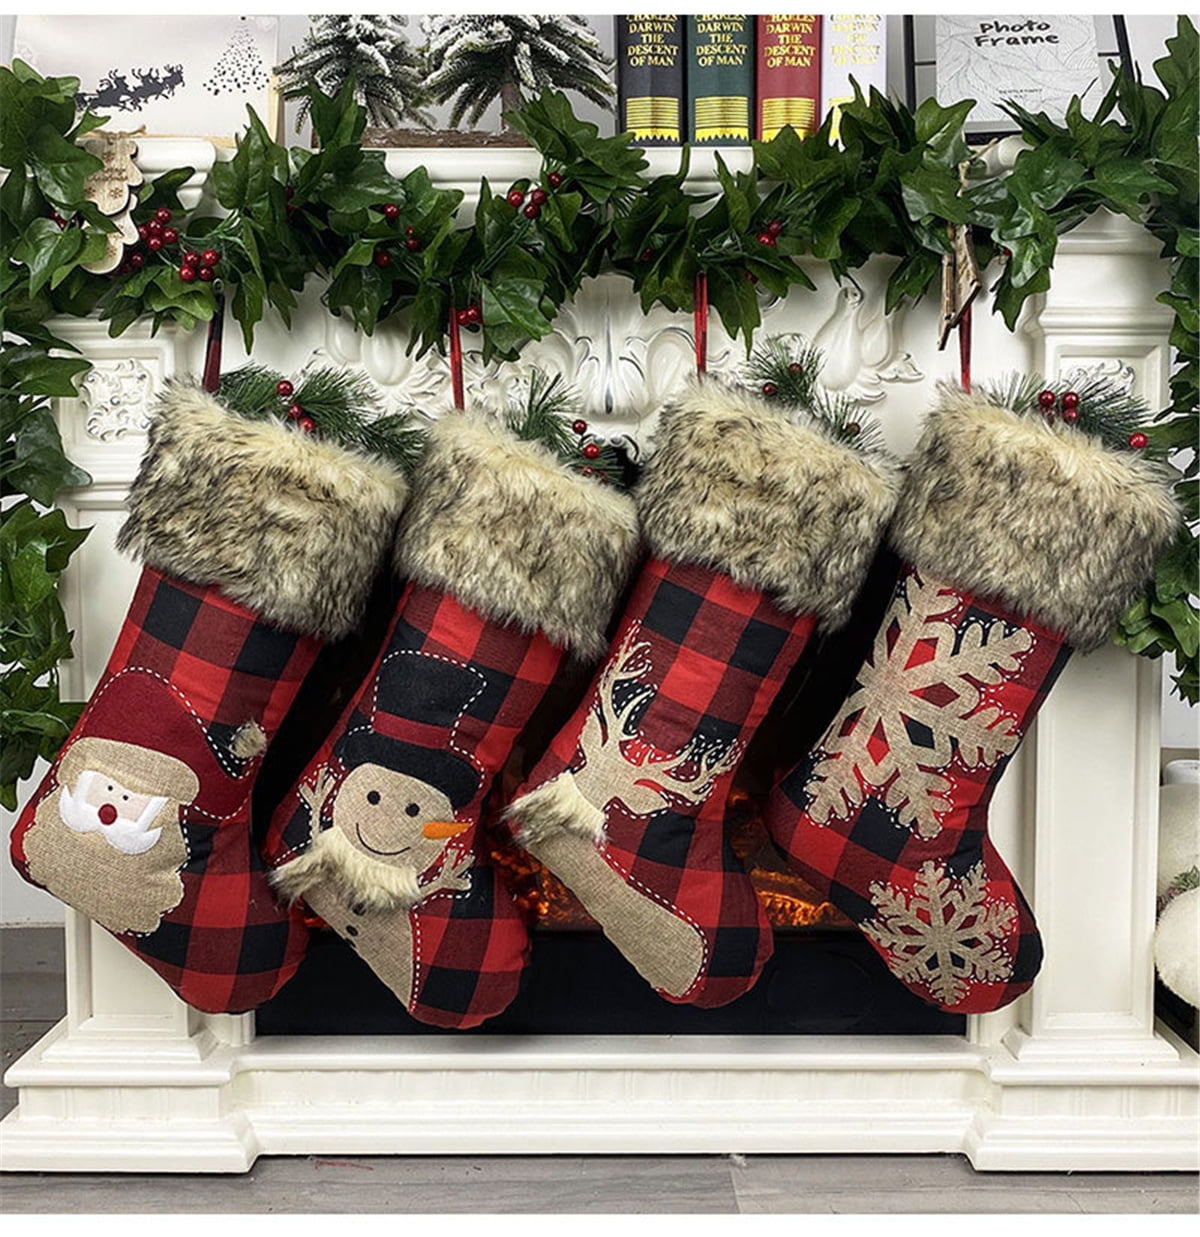 3 Assorted Kurt Adler Heavy Knit Snowflake and Chrismas Tree Stocking